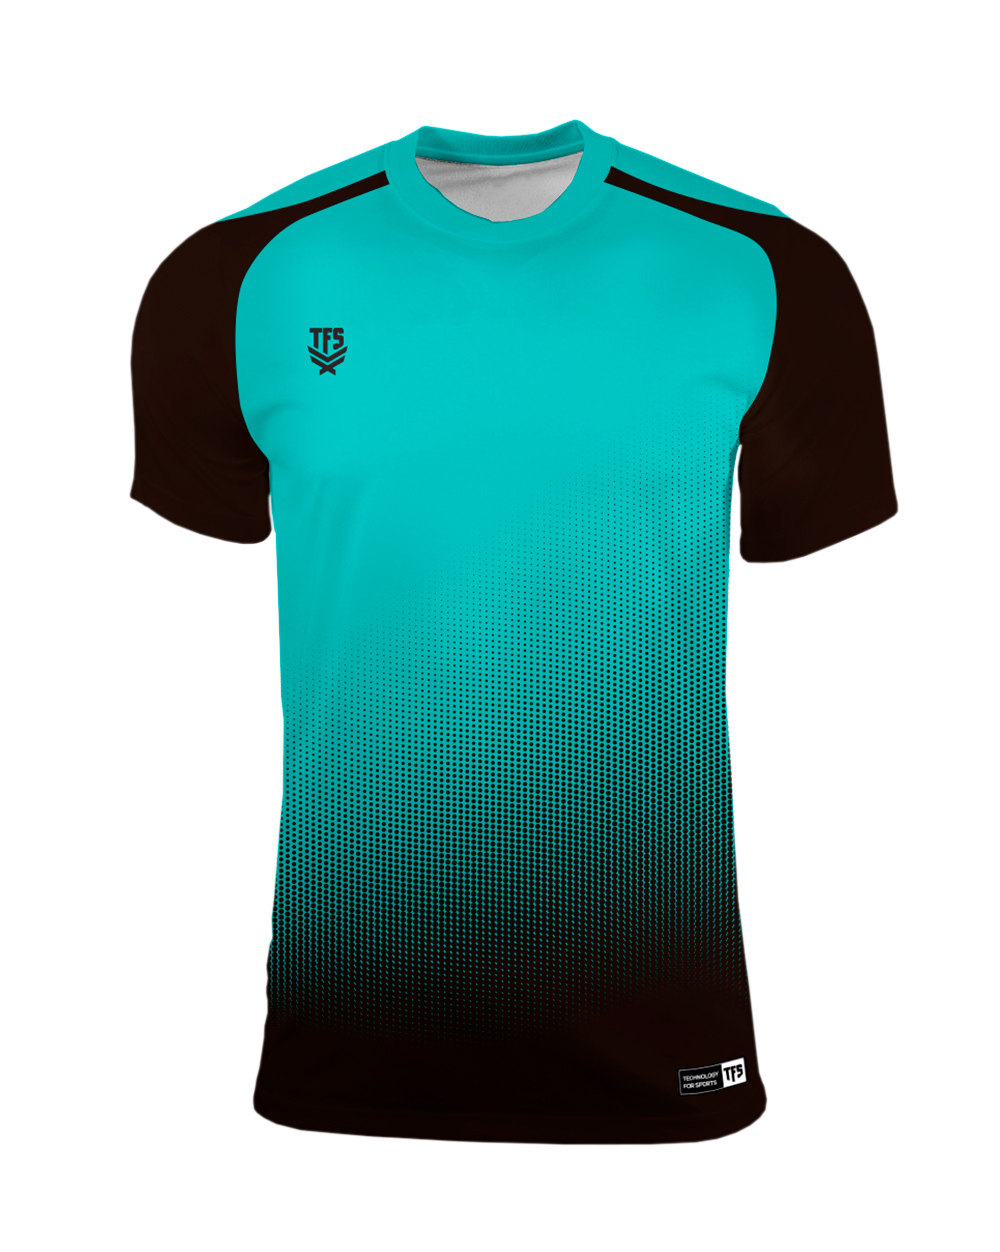 Niños Futbol TFS Holanda - Camisetas